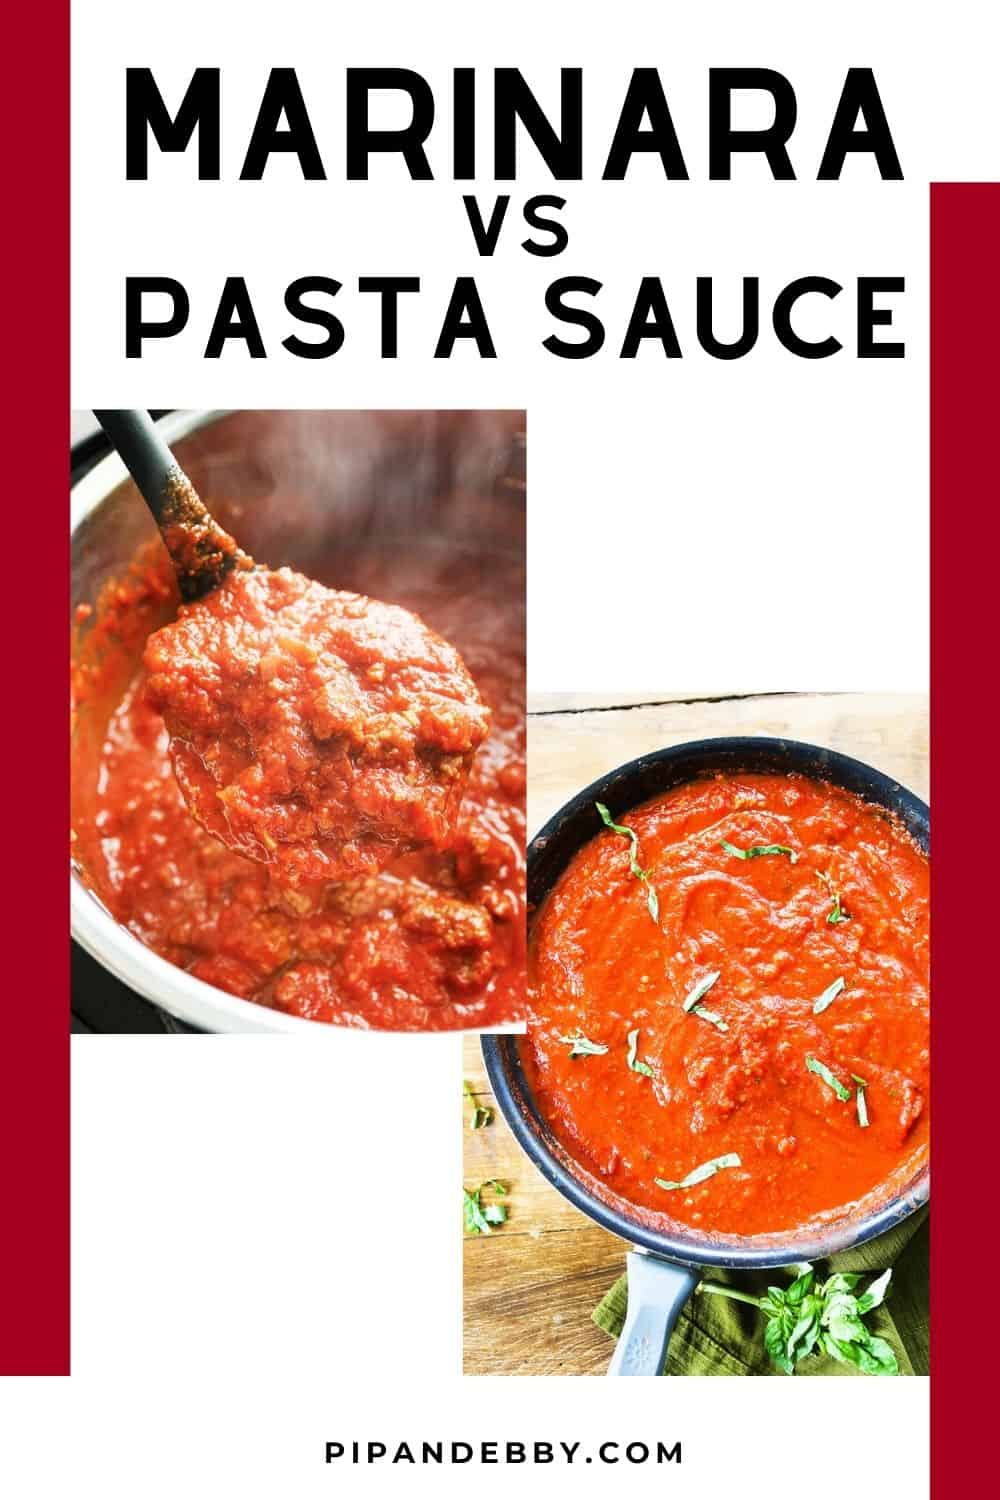 Marinara and pasta sauce side by side with text overlay reading, "Marinara vs pasta sauce."